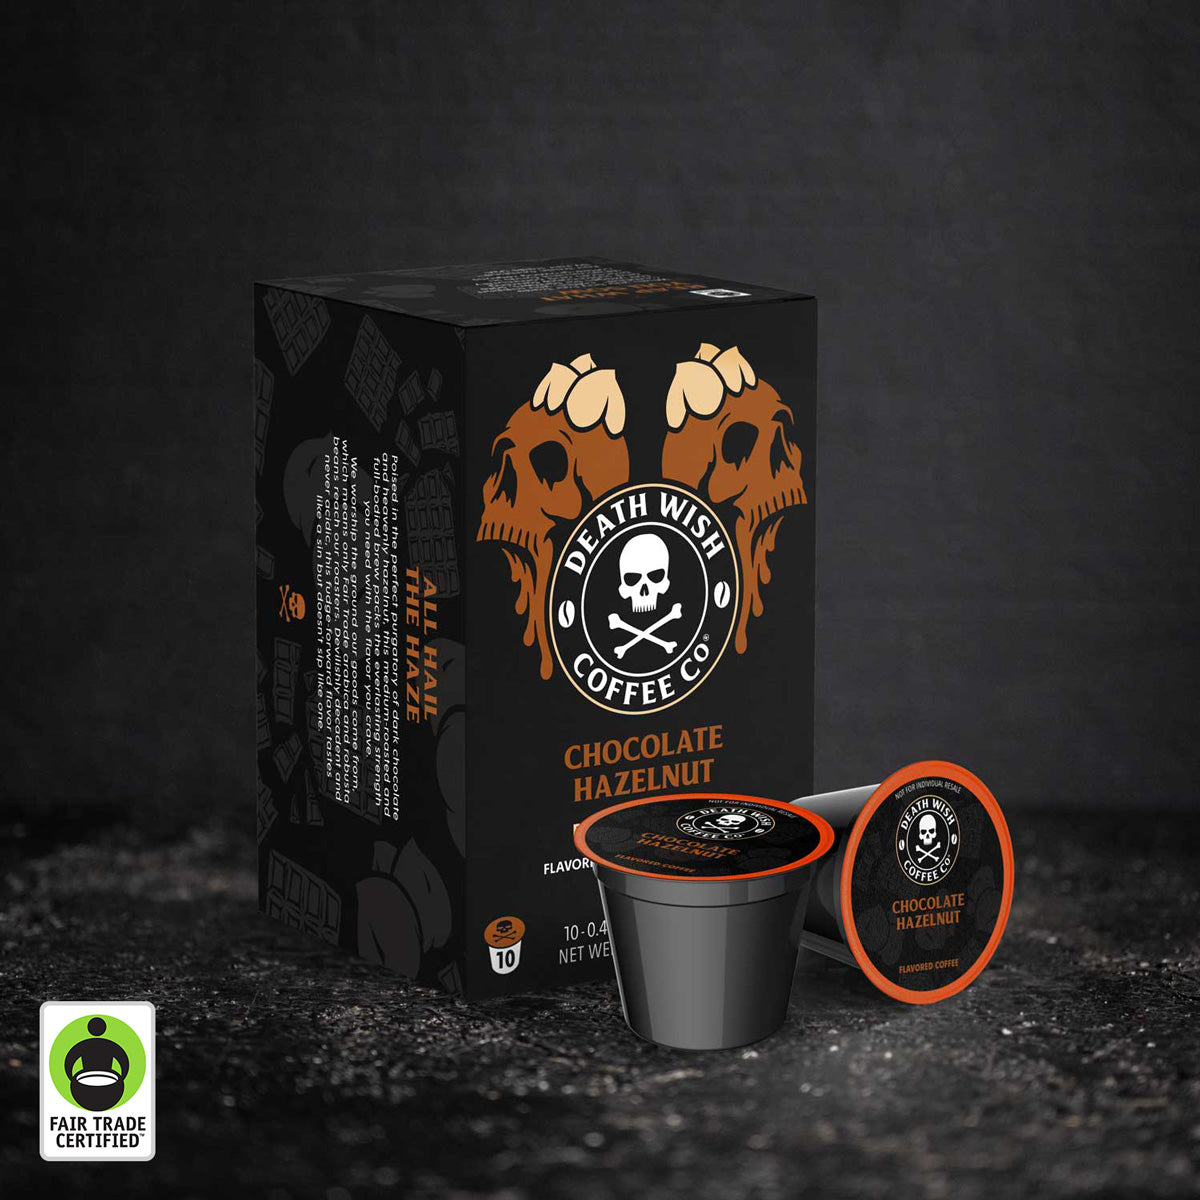 Death Wish Coffee Chocolate Hazelnut Flavored Single-Serve Coffee Pods - 10 Count